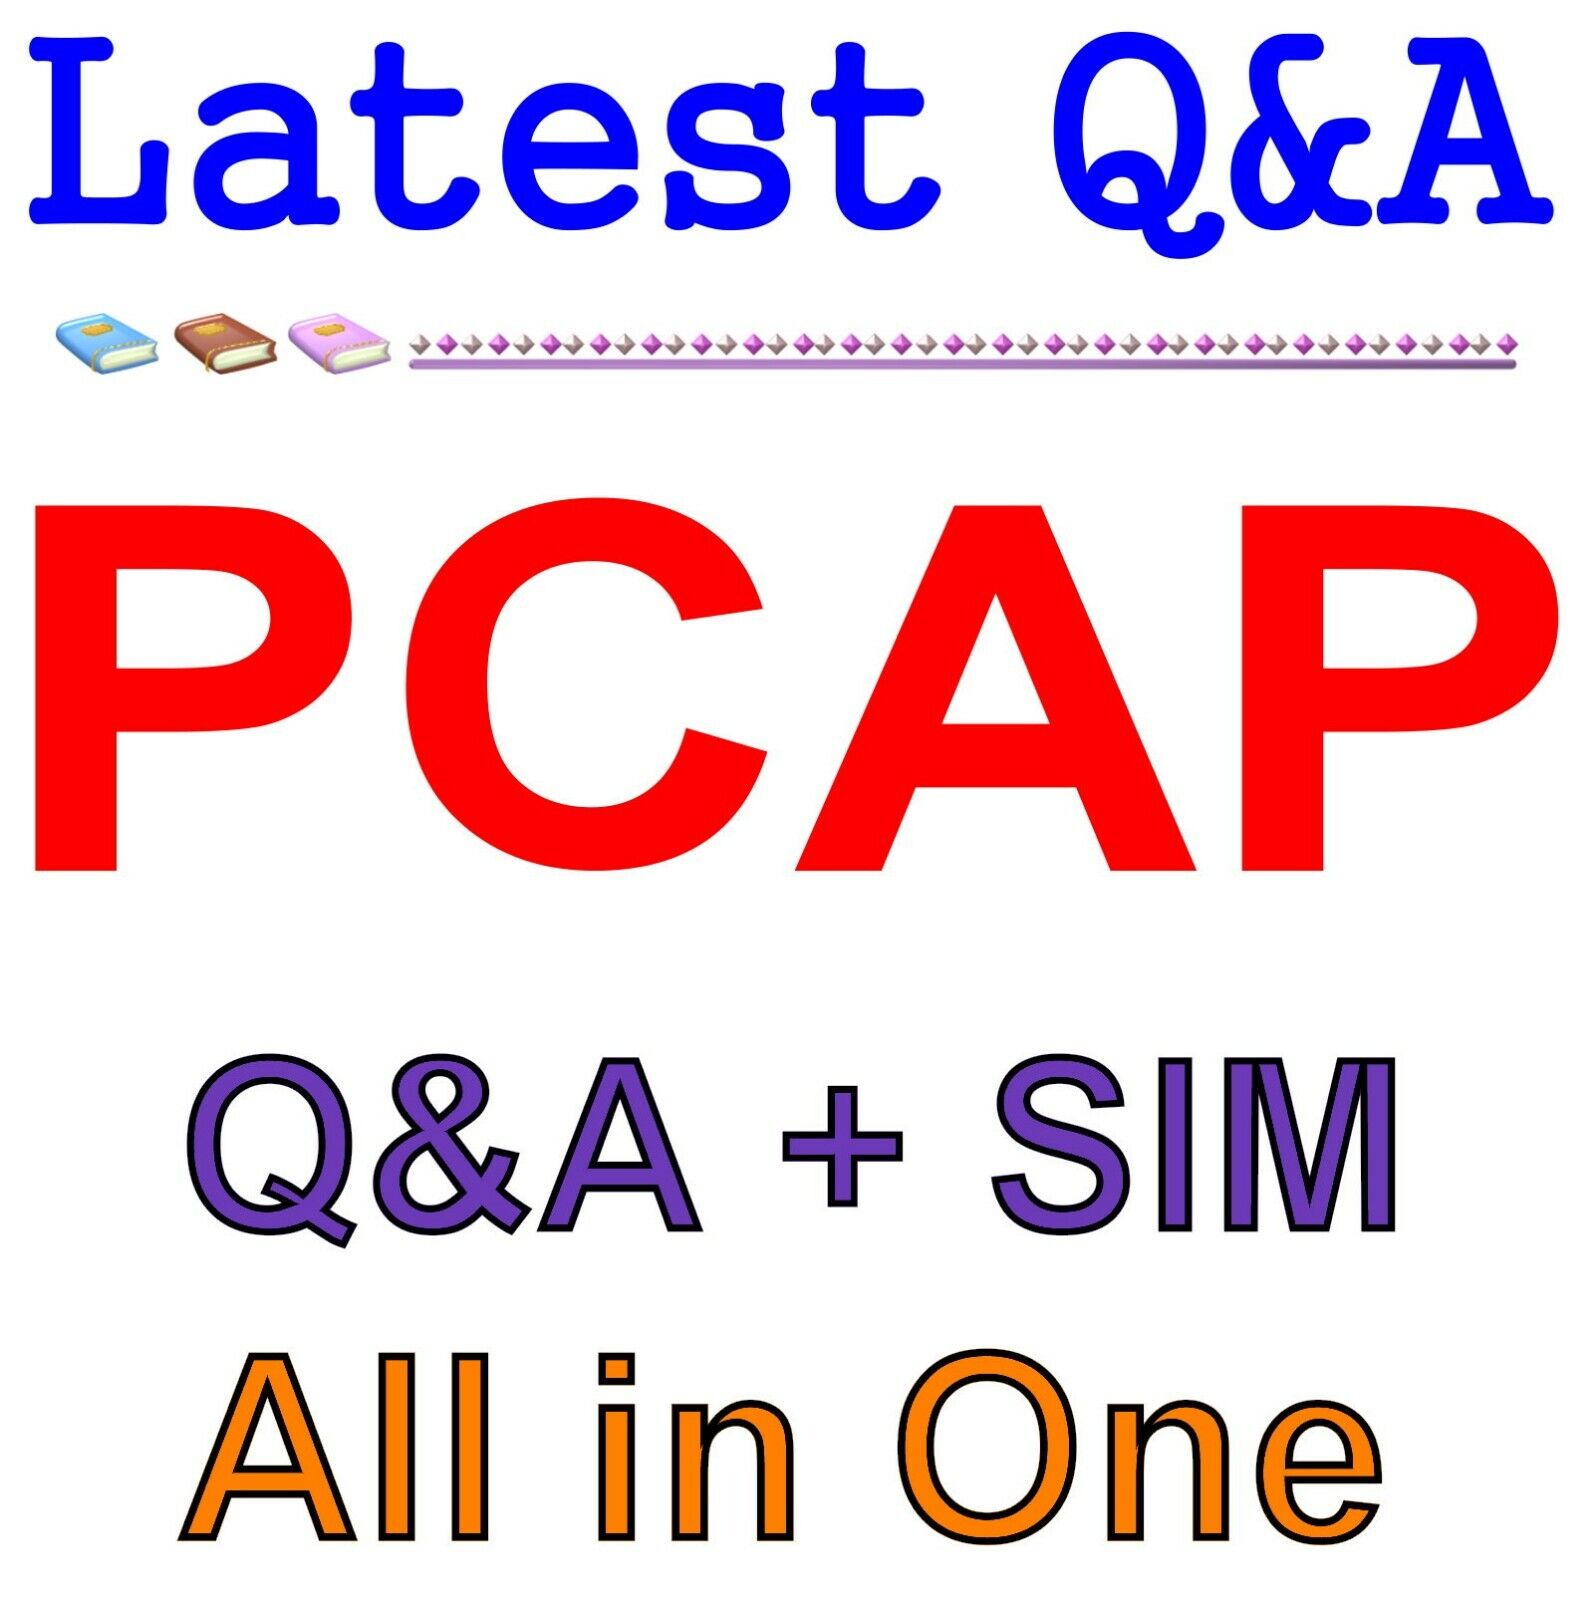 Certified Associate in Python Programming PCAP Exam Q&A+SIM